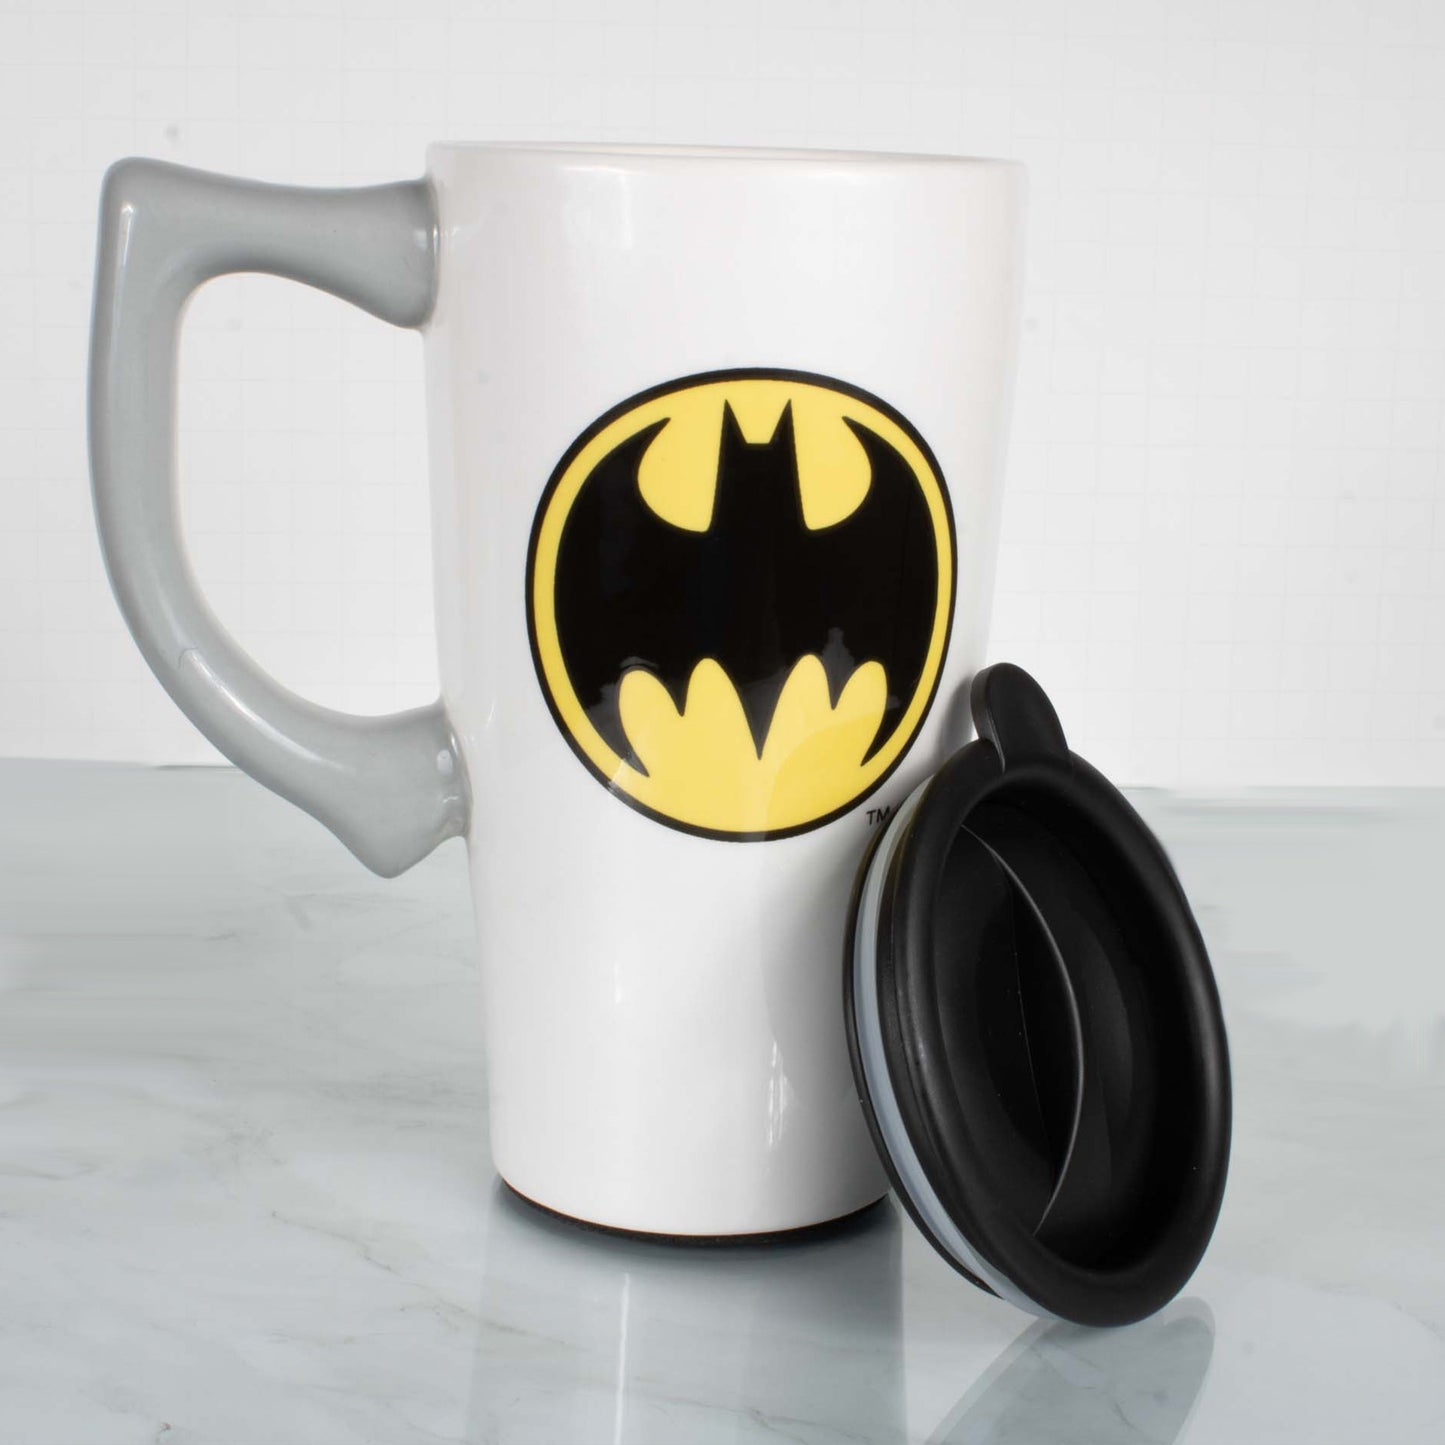 Batman Classic Ceramic 16 oz. Travel Mug